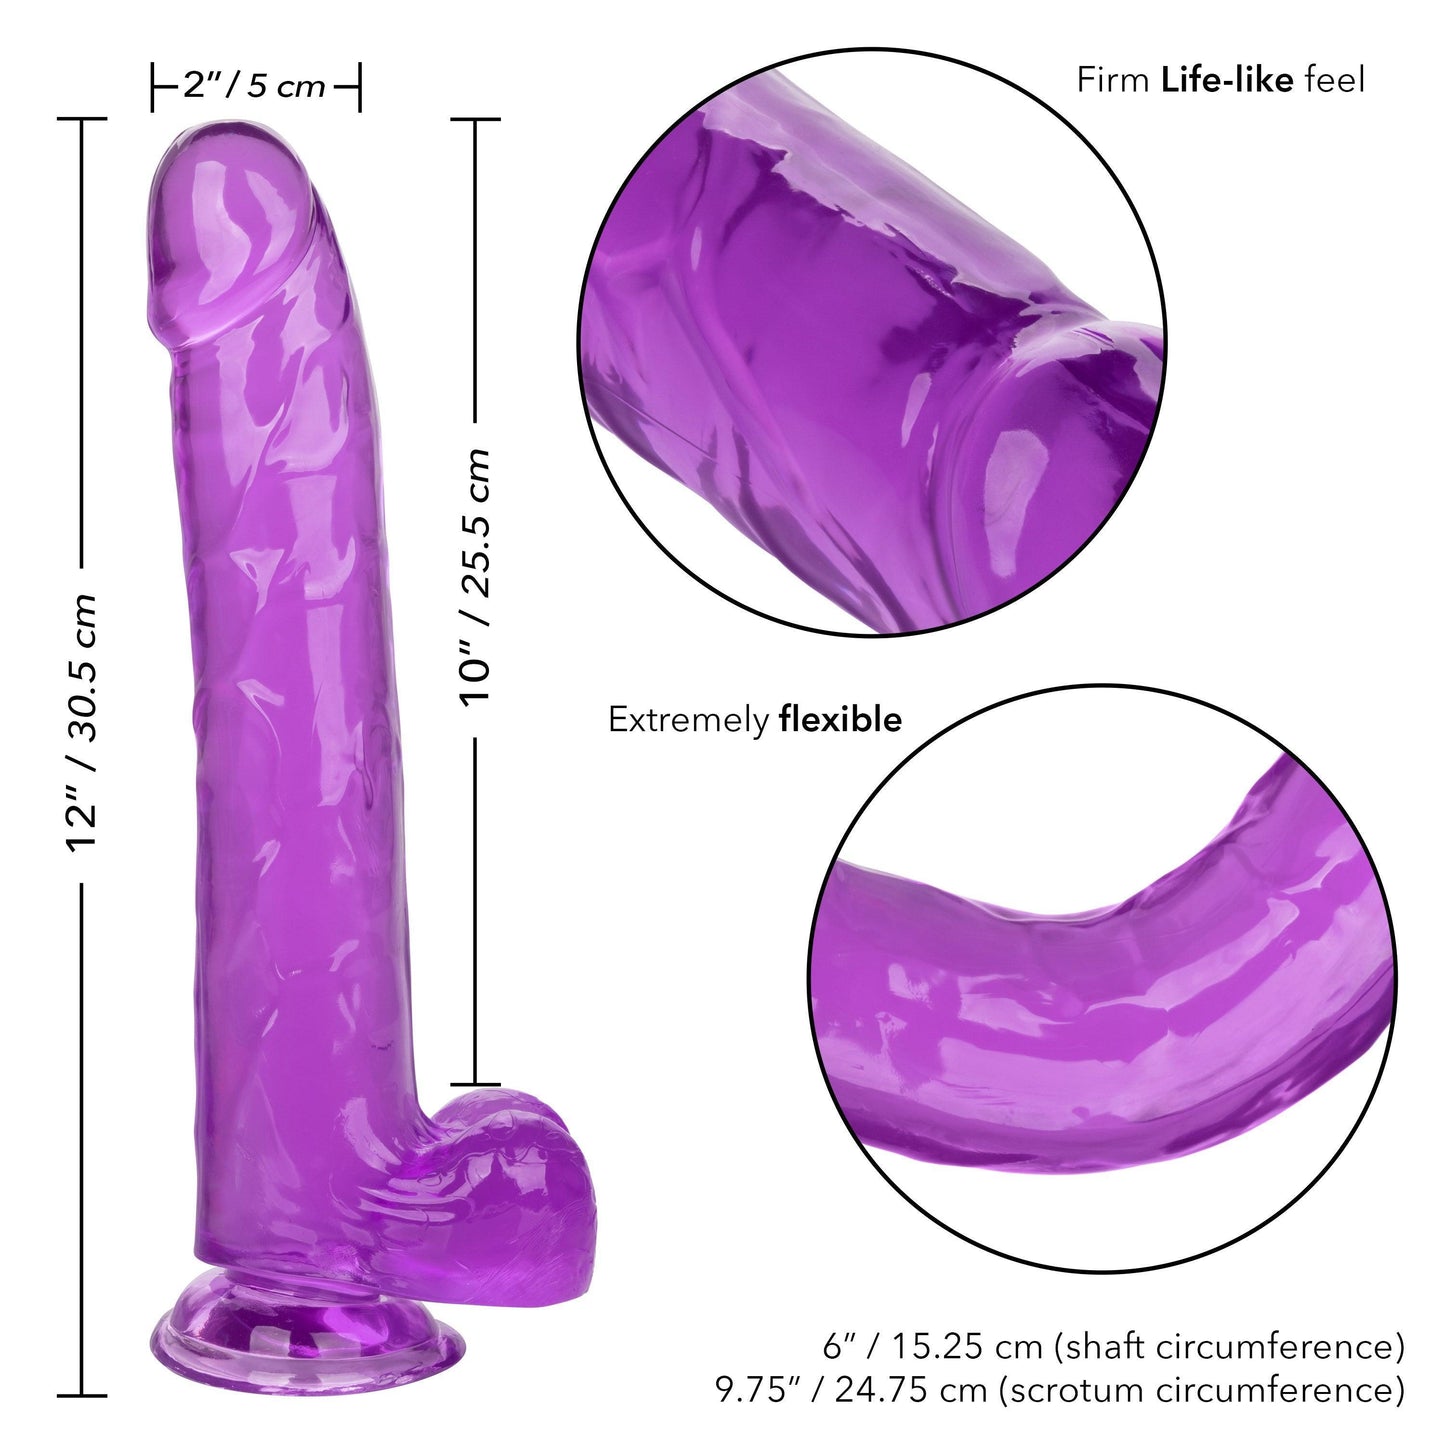 Size Queen 10 Inch - 25.5cm - Purple - My Sex Toy Hub